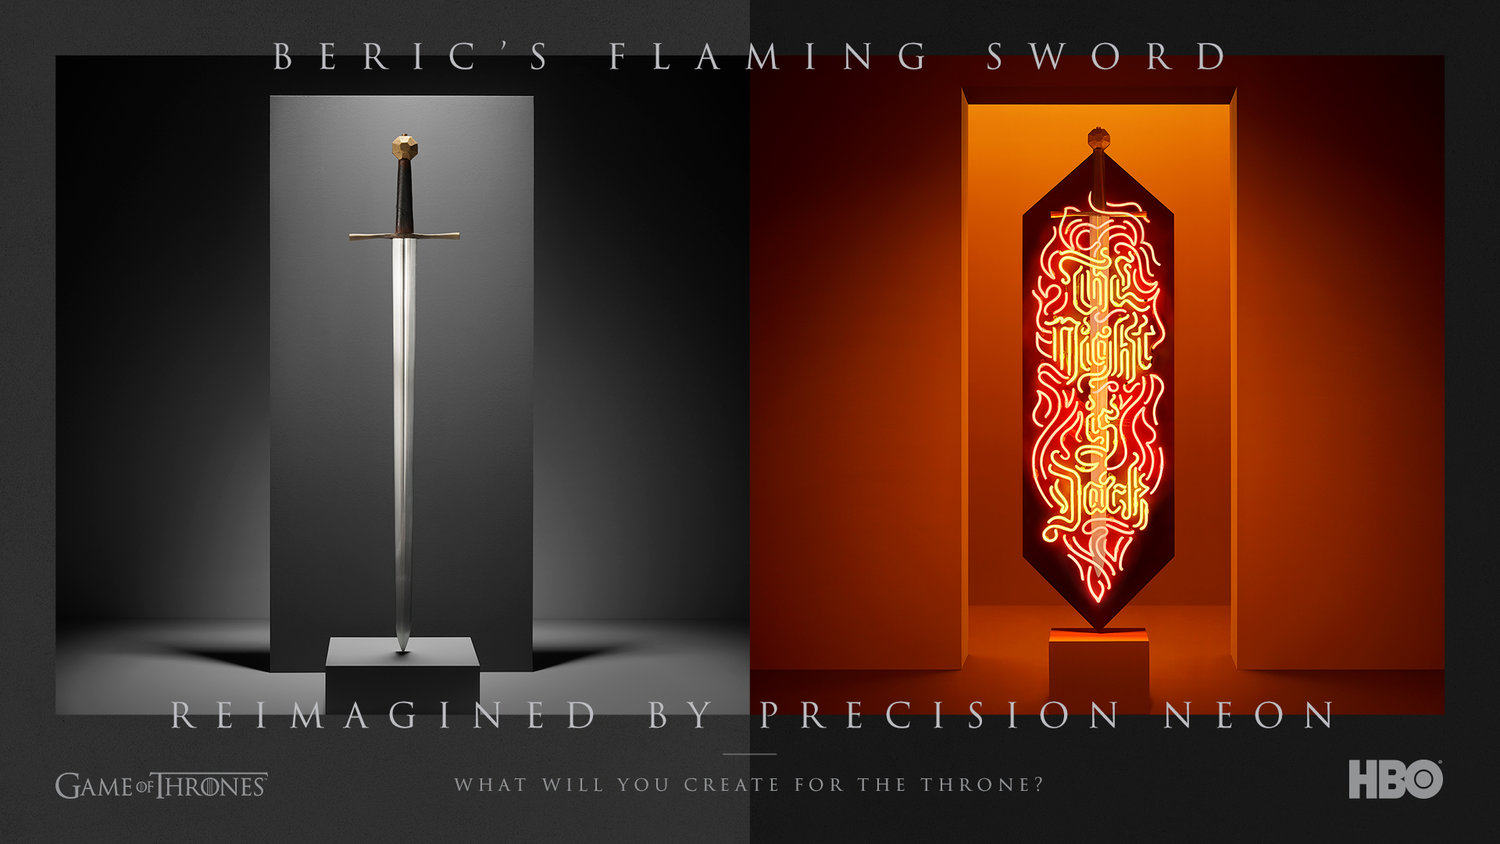 03_NOTW_Berics_Flaming_Sword_Precision_Neon